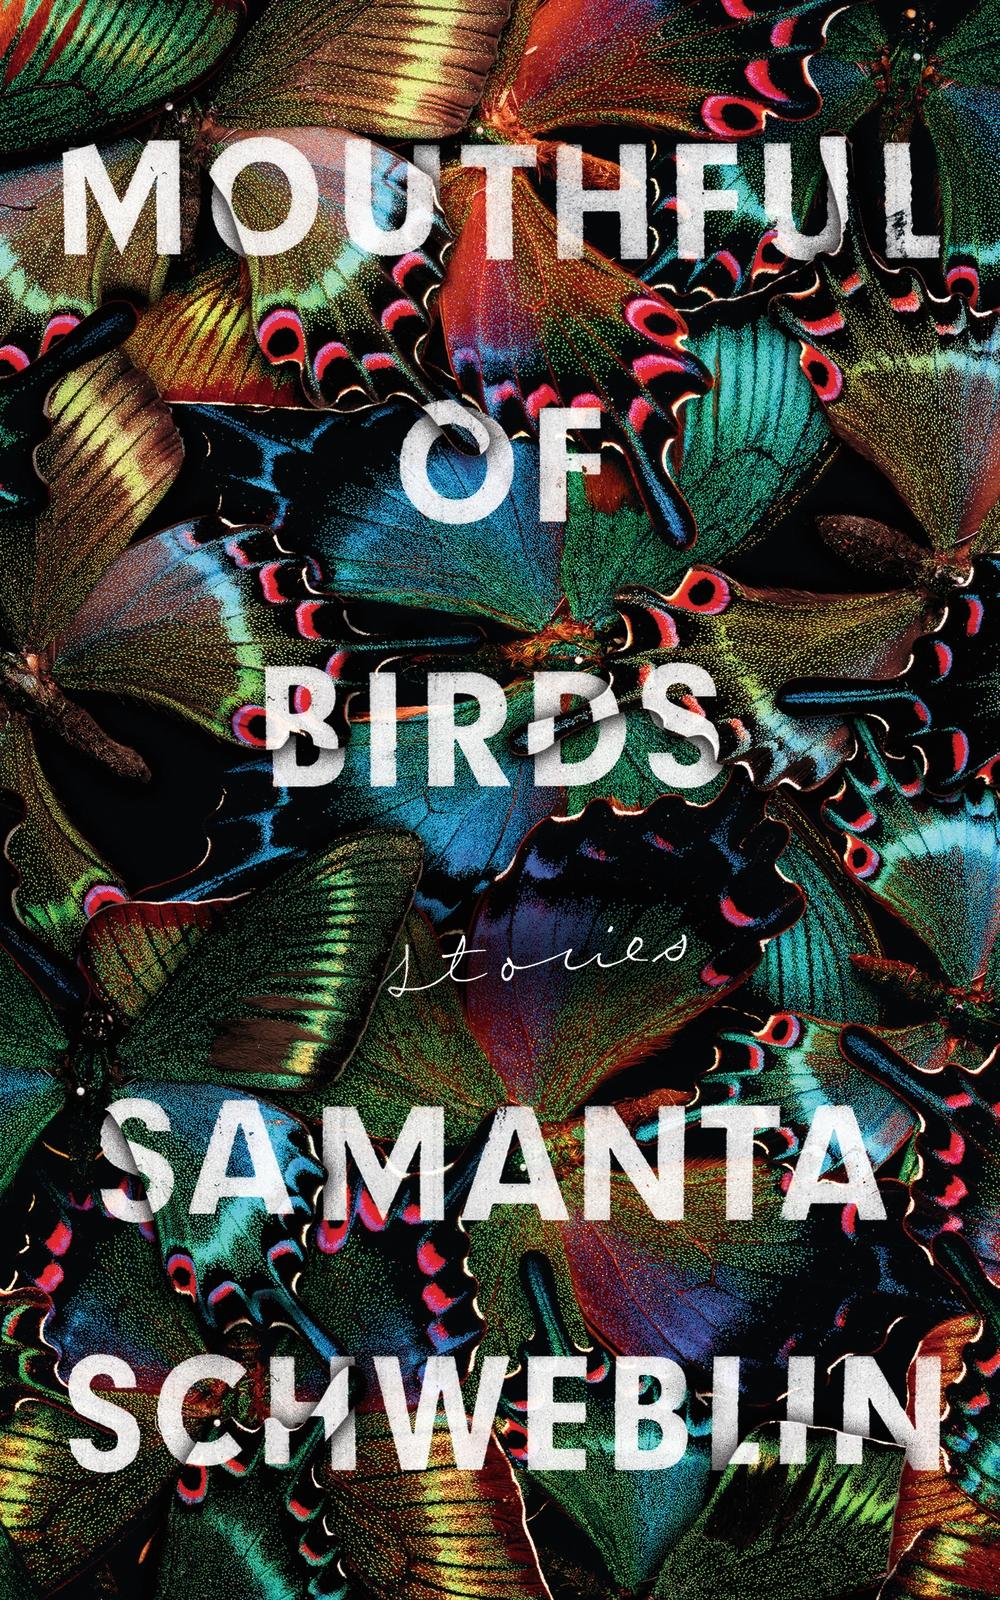 Mouthful of Birds - Samanta Schweblin